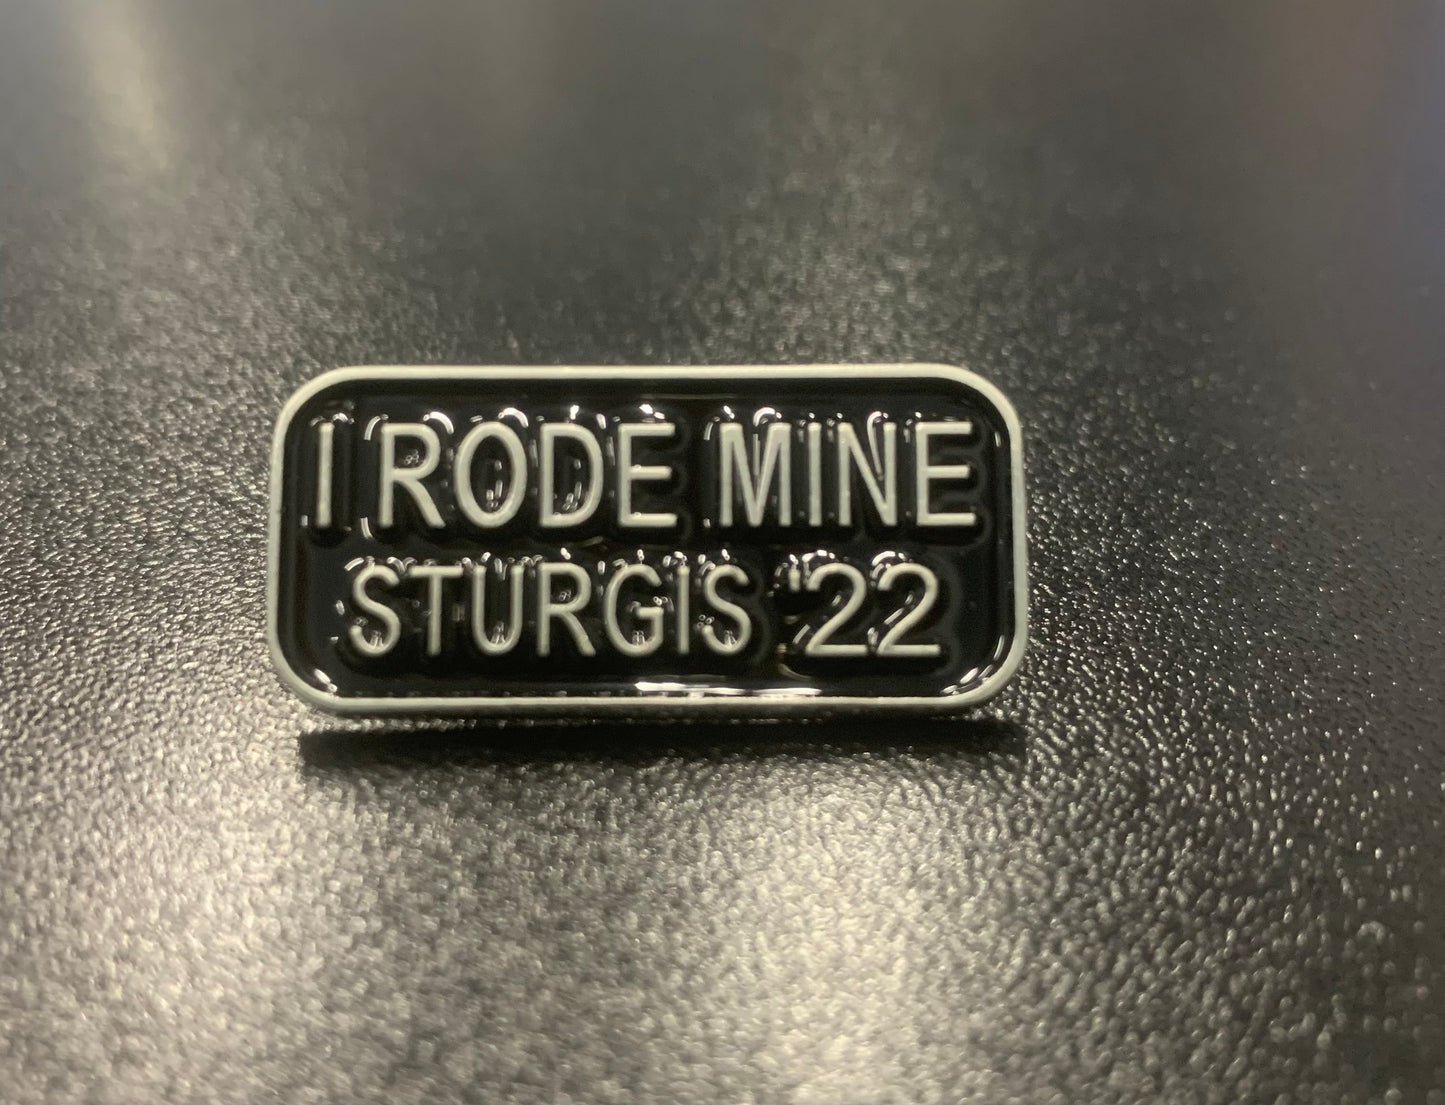 2022 Sturgis I Rode Mine Pin